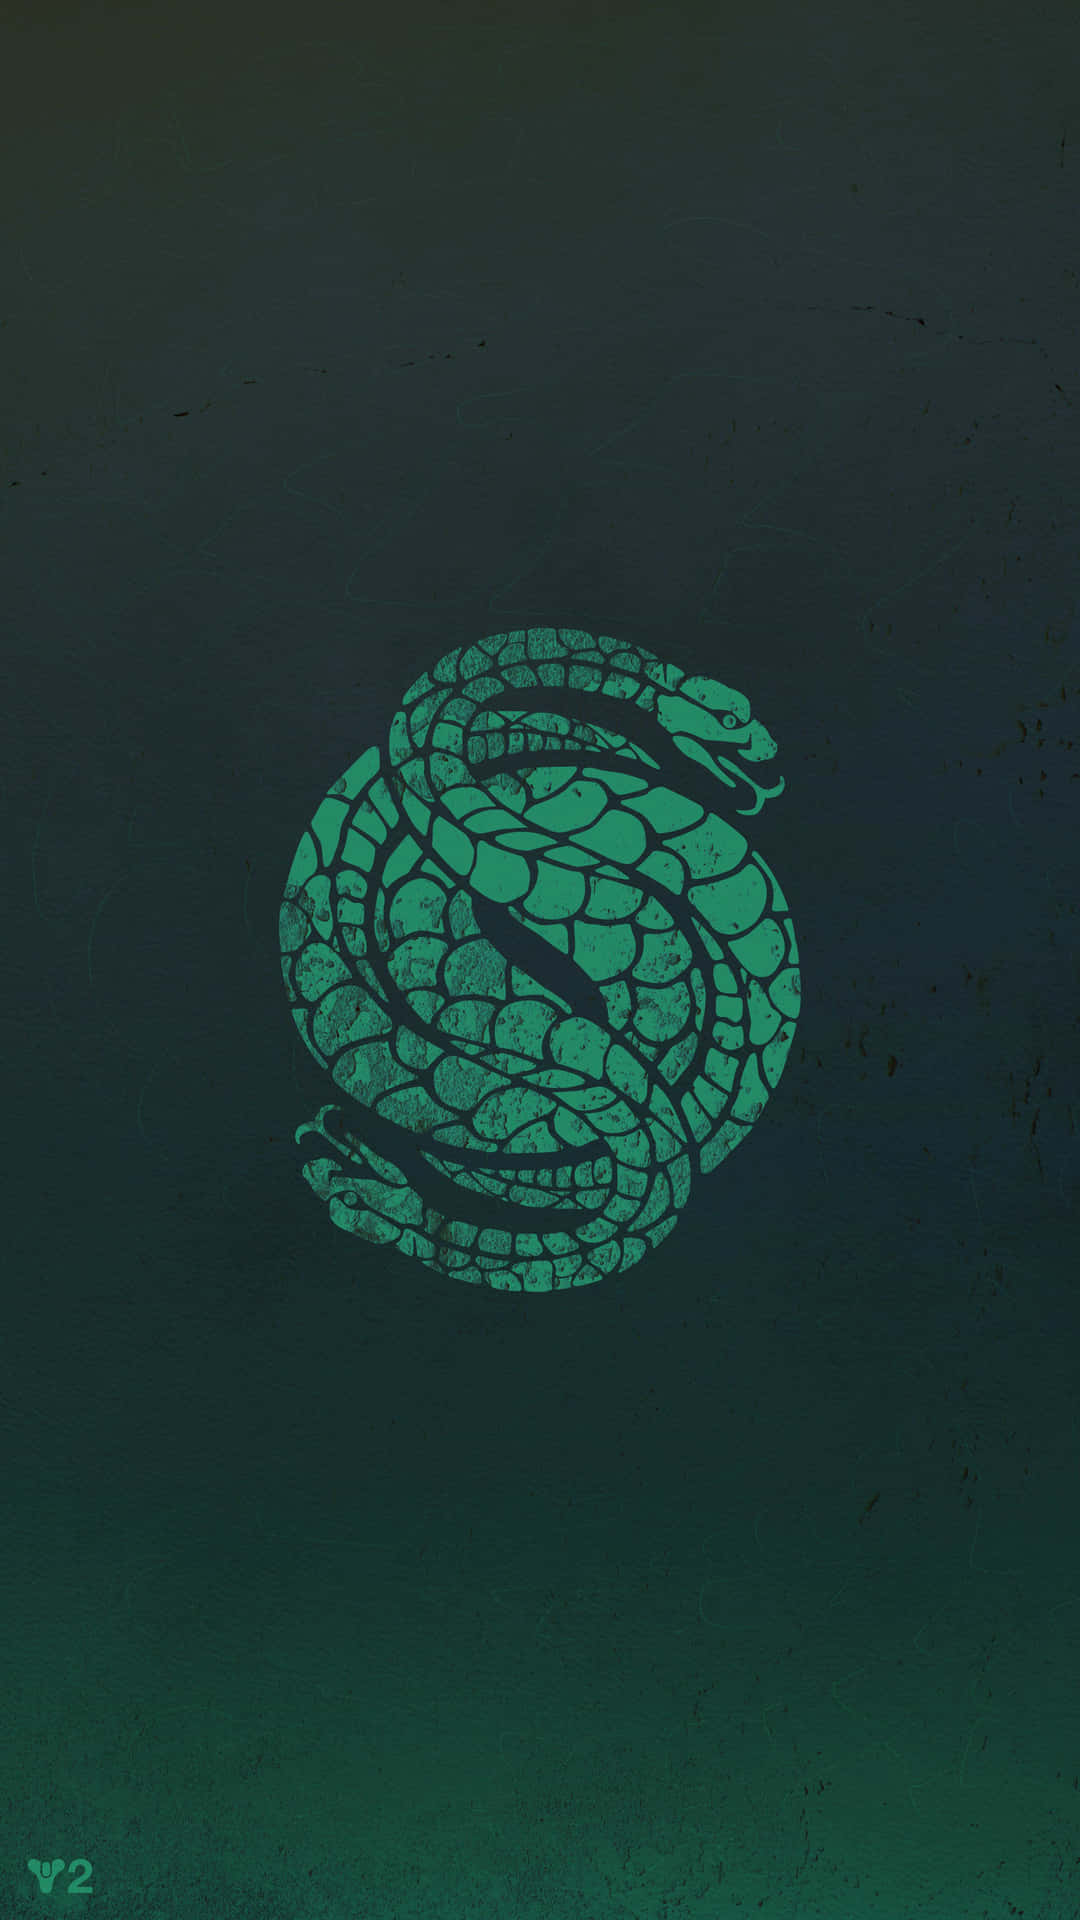 Gambit Snake Destiny 2 Logo Wallpaper